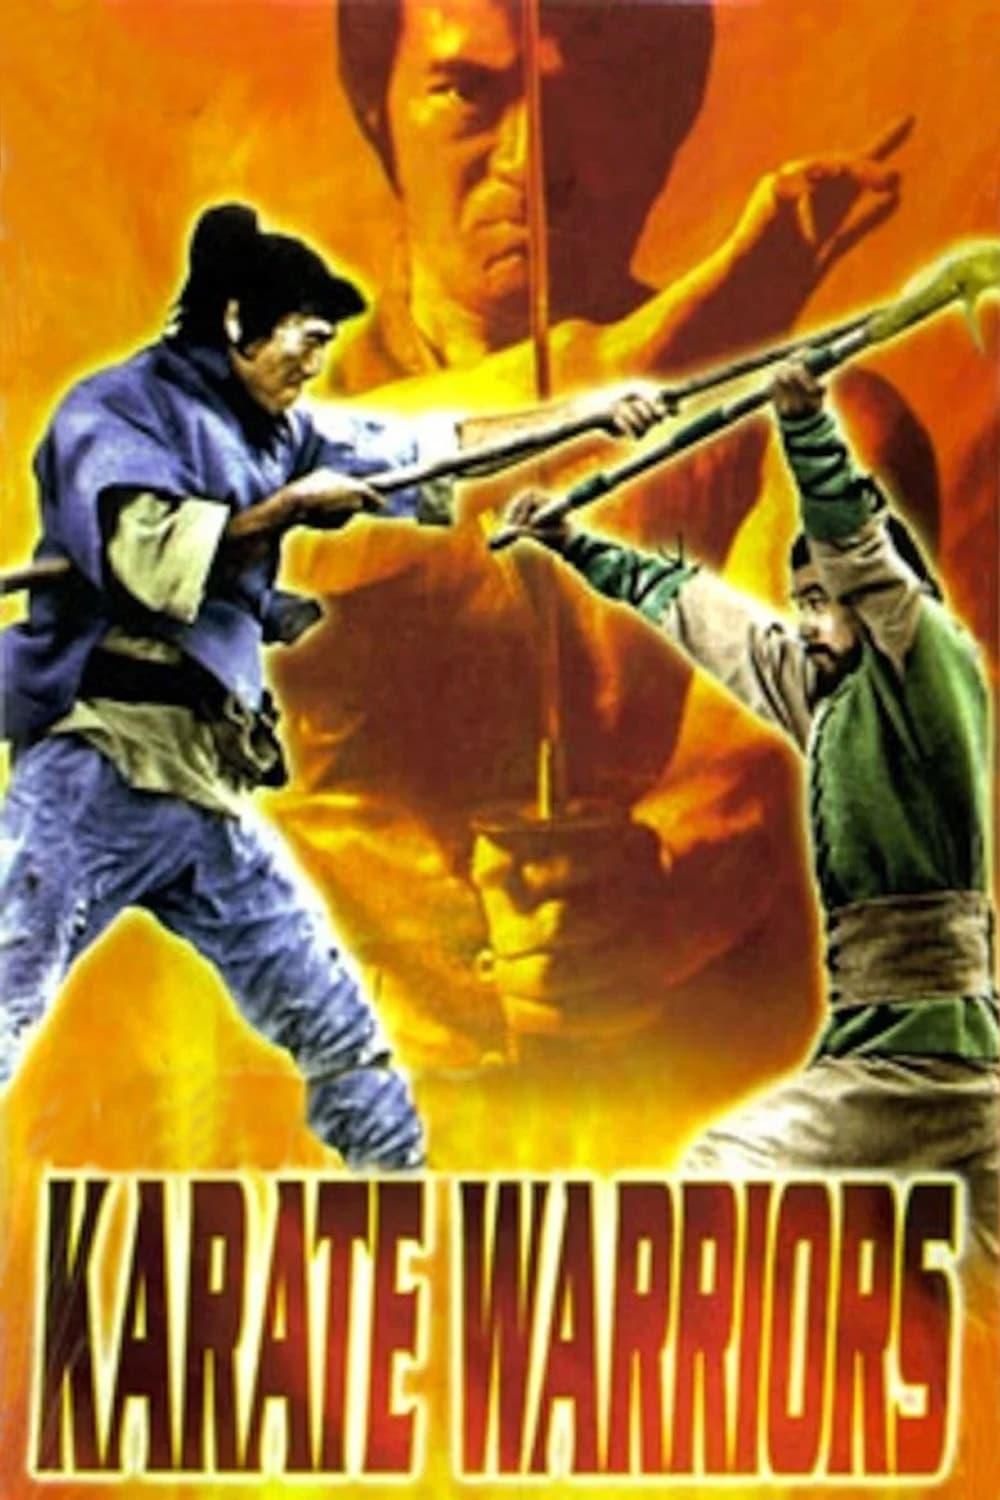 Karate Warriors poster